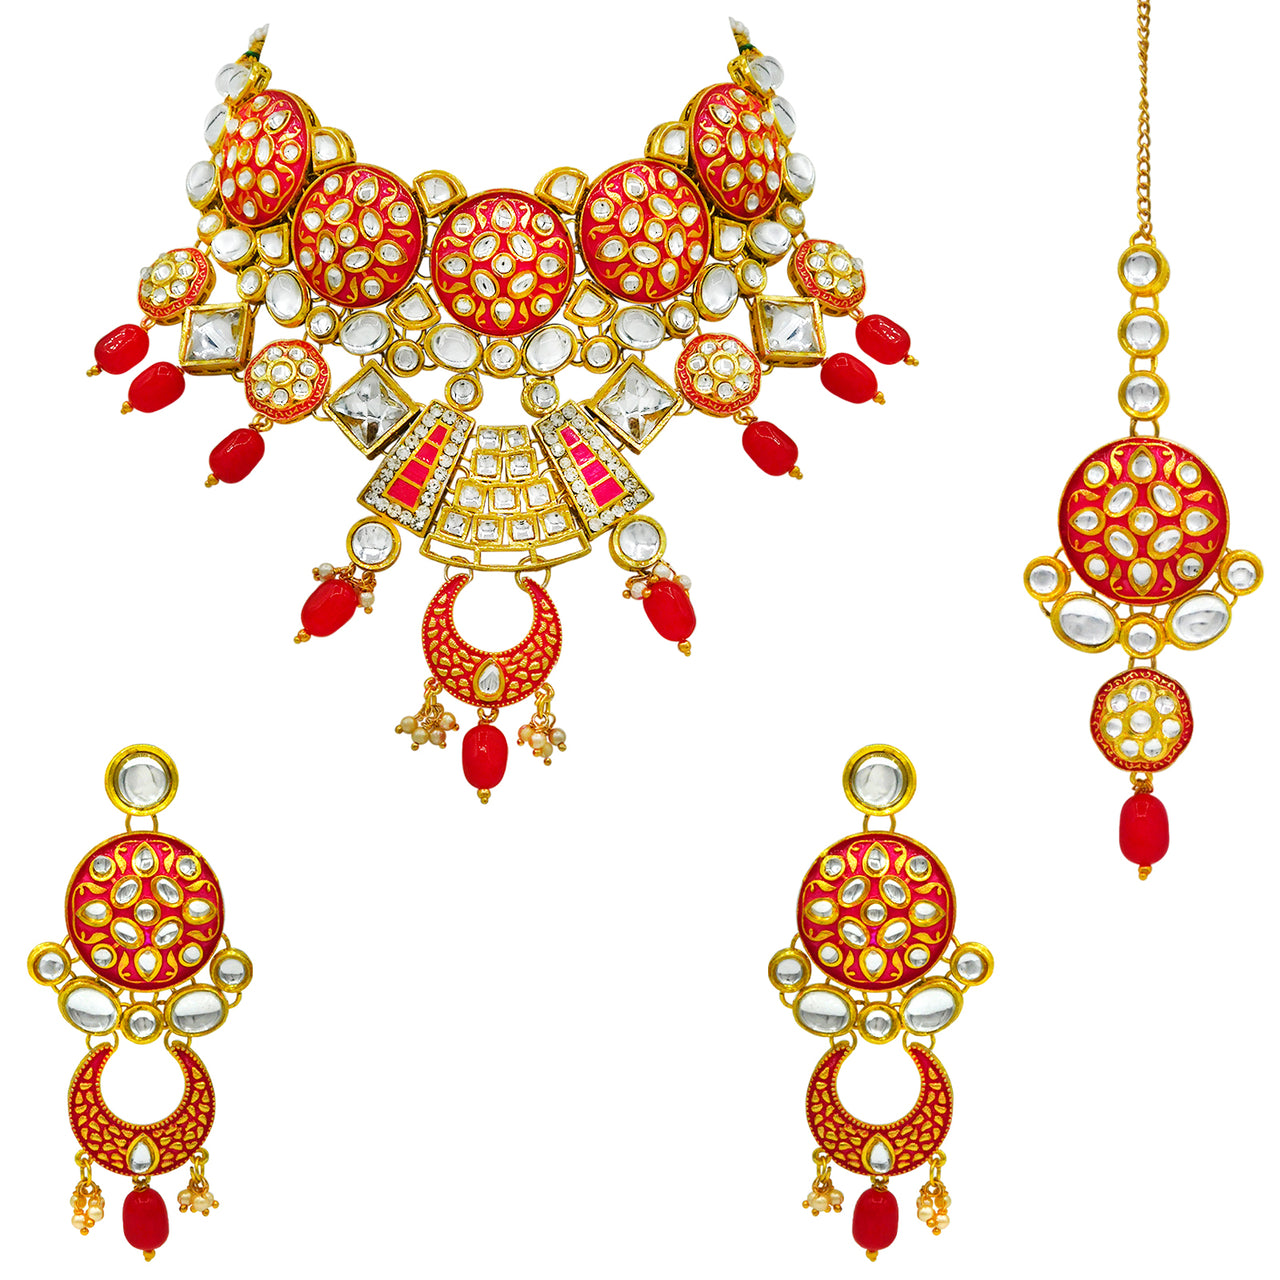 Sujwel Kundan and Meenakari Necklace Set (08-0311) - Sujwel